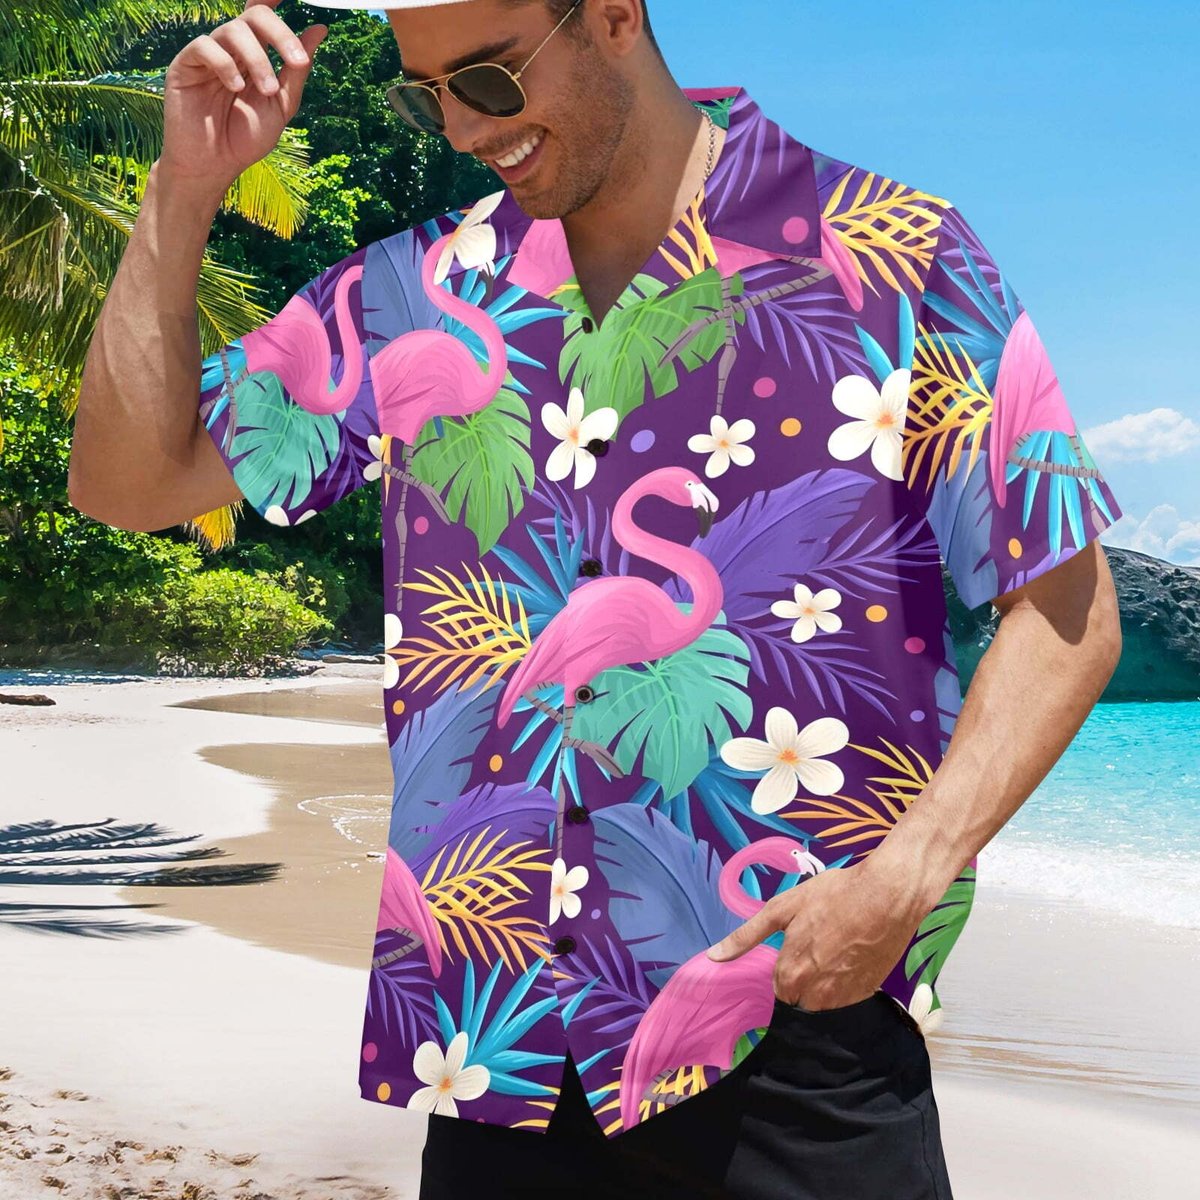 New Flamingo design.  imaginariumdepot.us/WM-Mens-Hawaii… 
#fathersdaygifts #giftsfordad #DadGifts #fathersdayideas #giftideasfordad #beachwear #hawaiianshirt  #beachvibes #alohalife #tropicalvibes